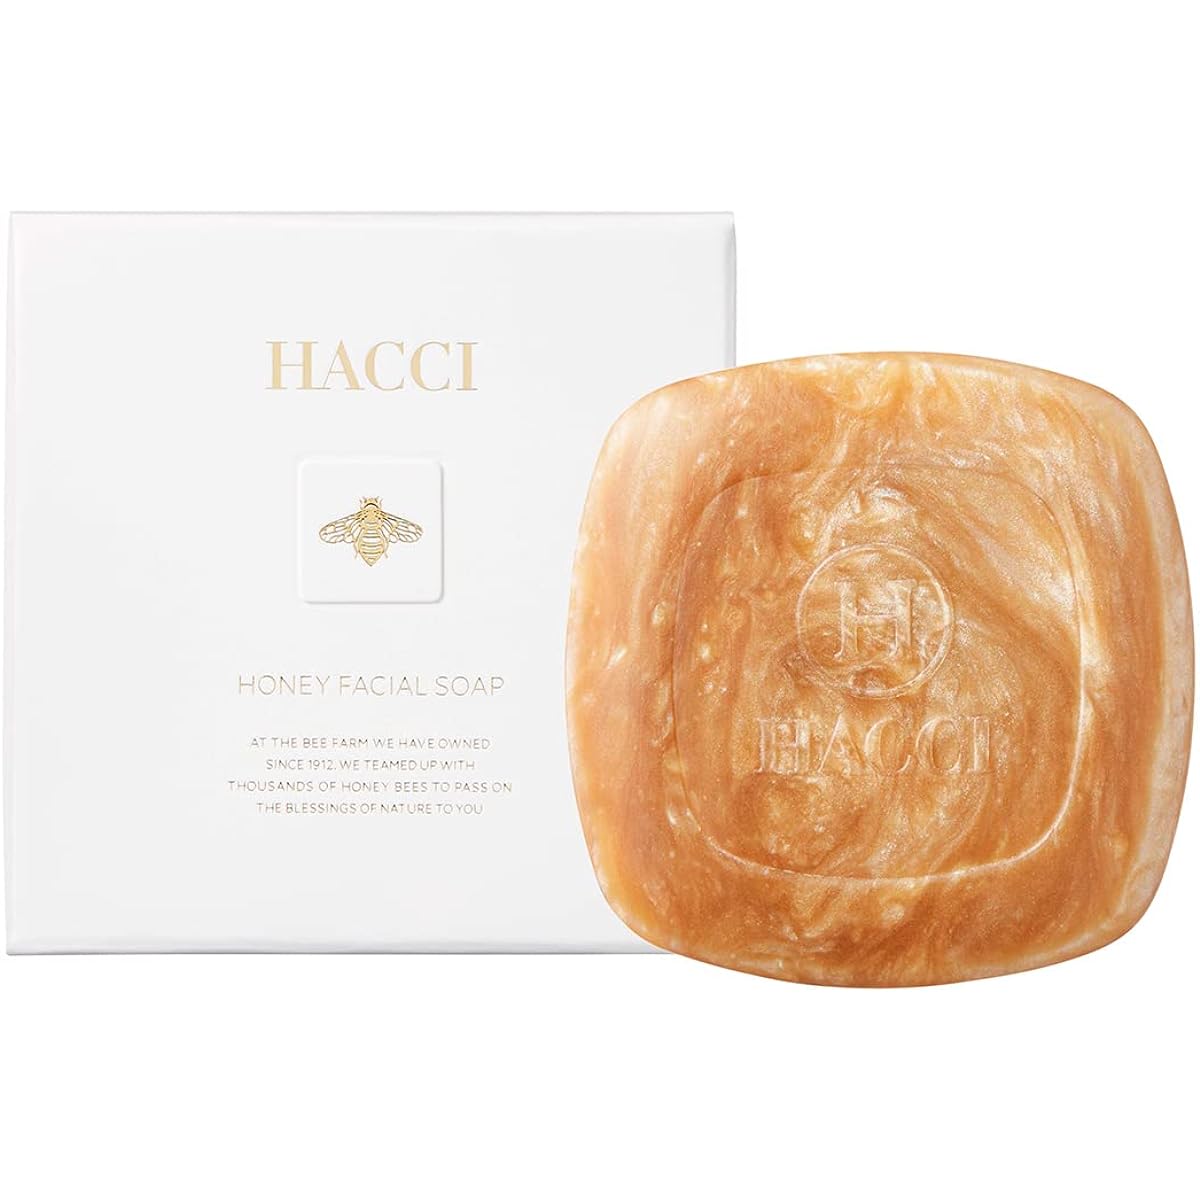 HACCI honey facial soap 80g